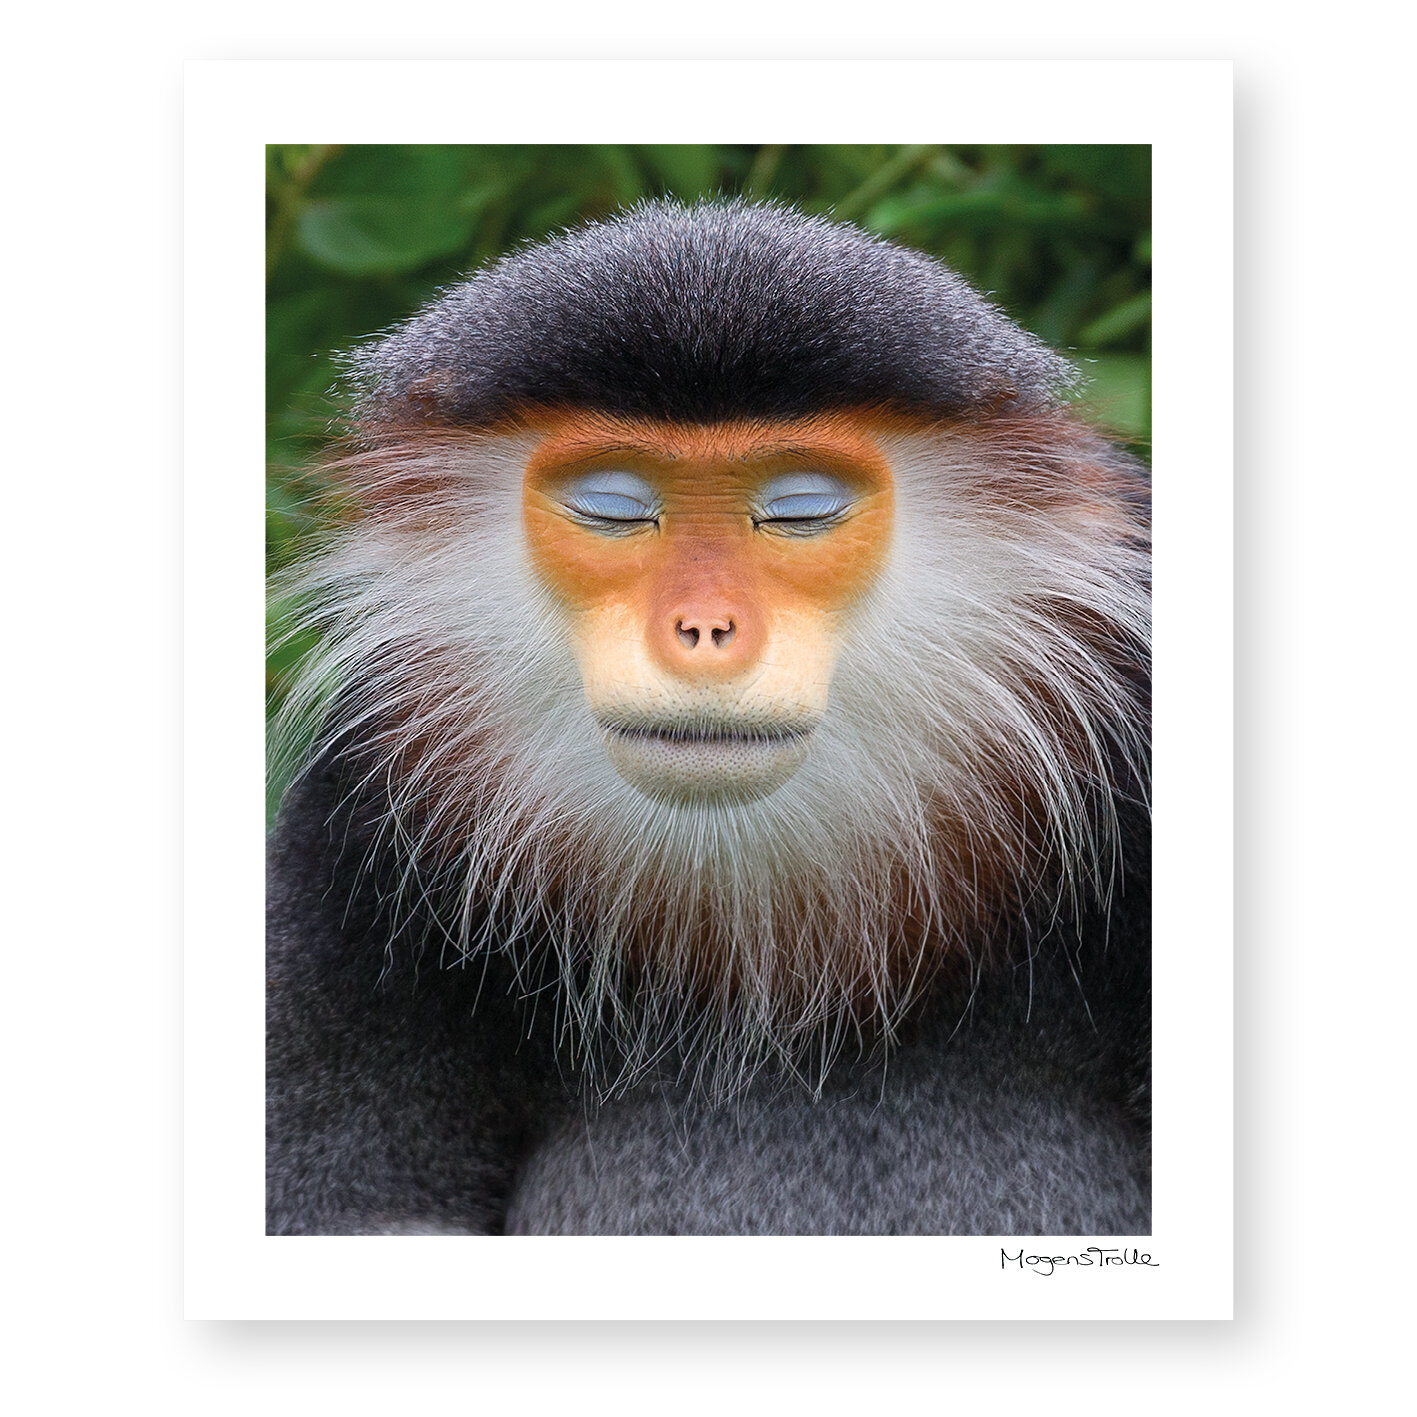 The zen monkey close-up